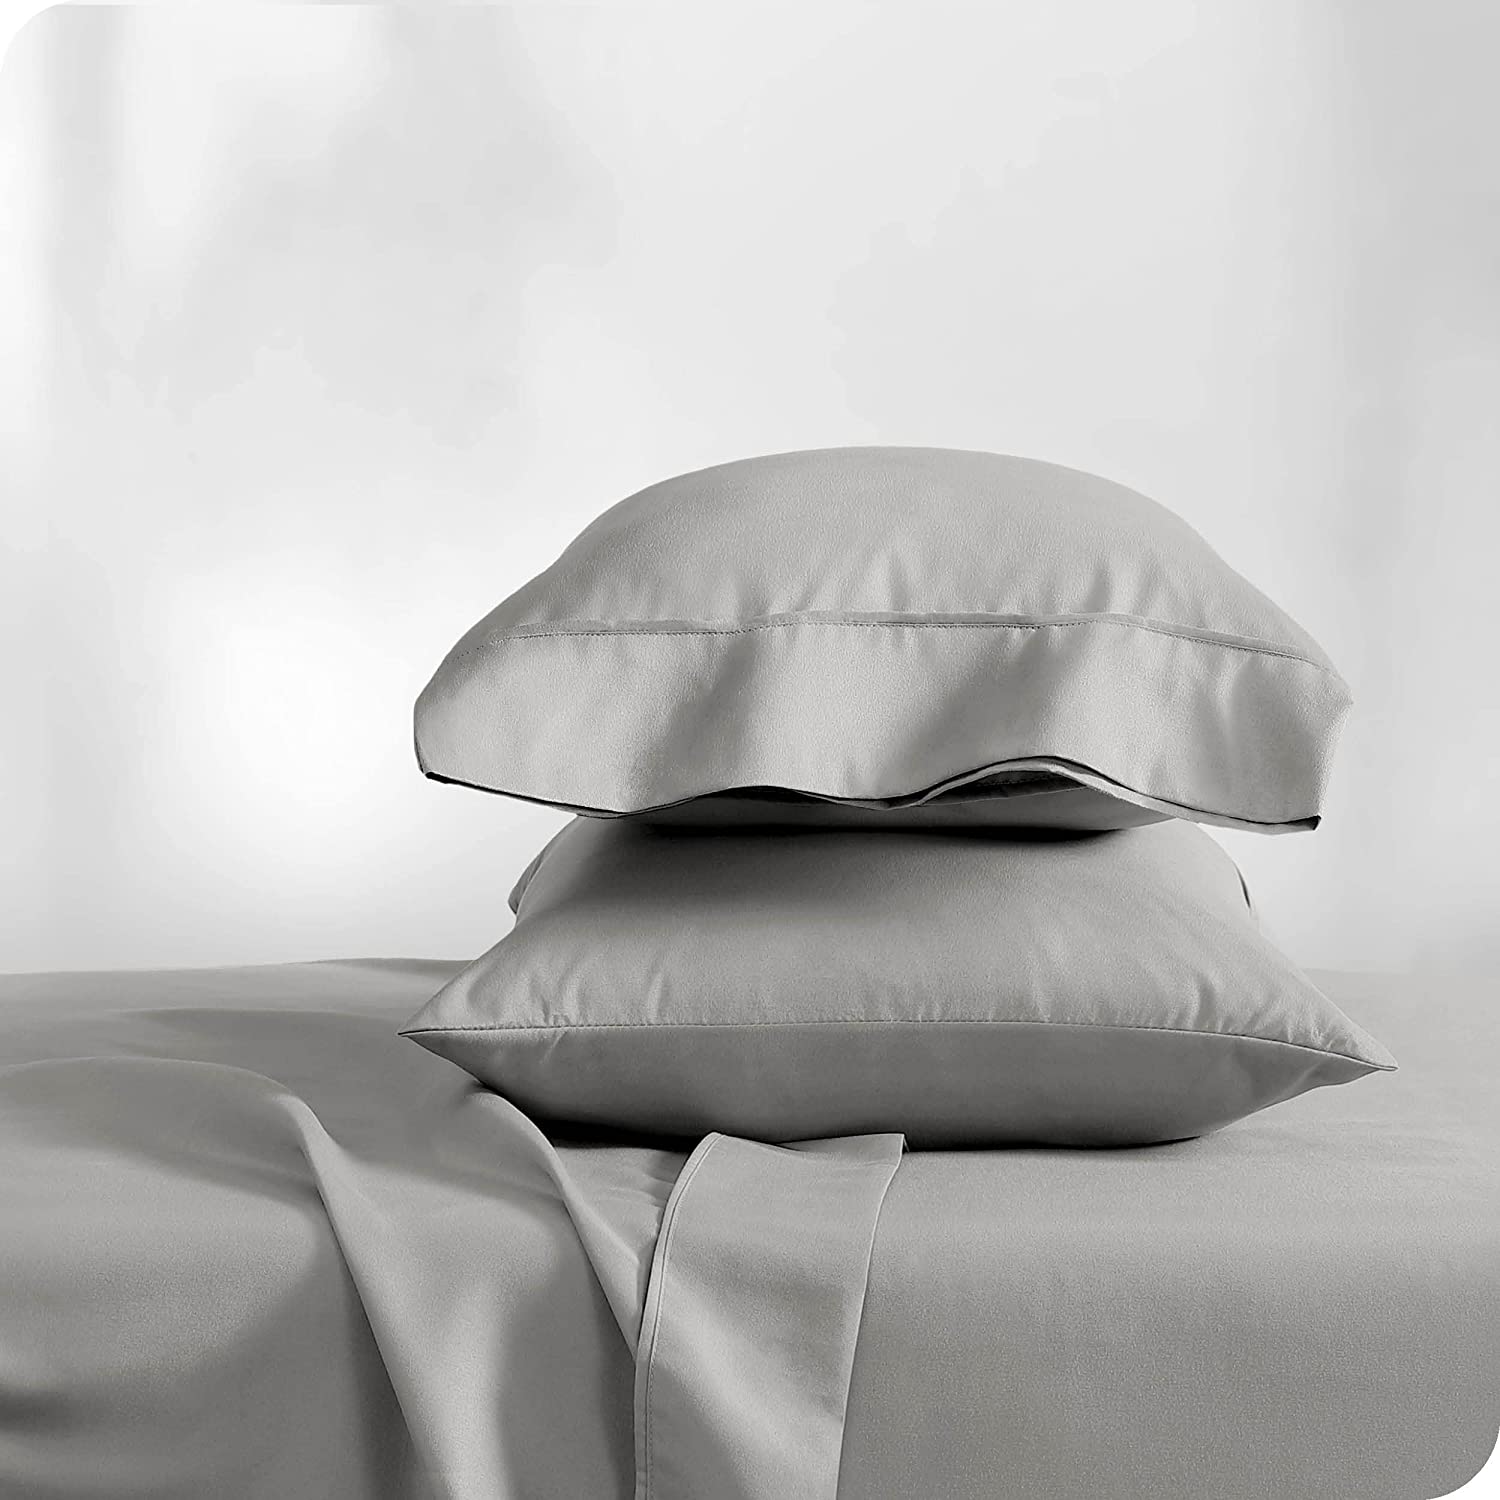 Light Grey Bed Sheets